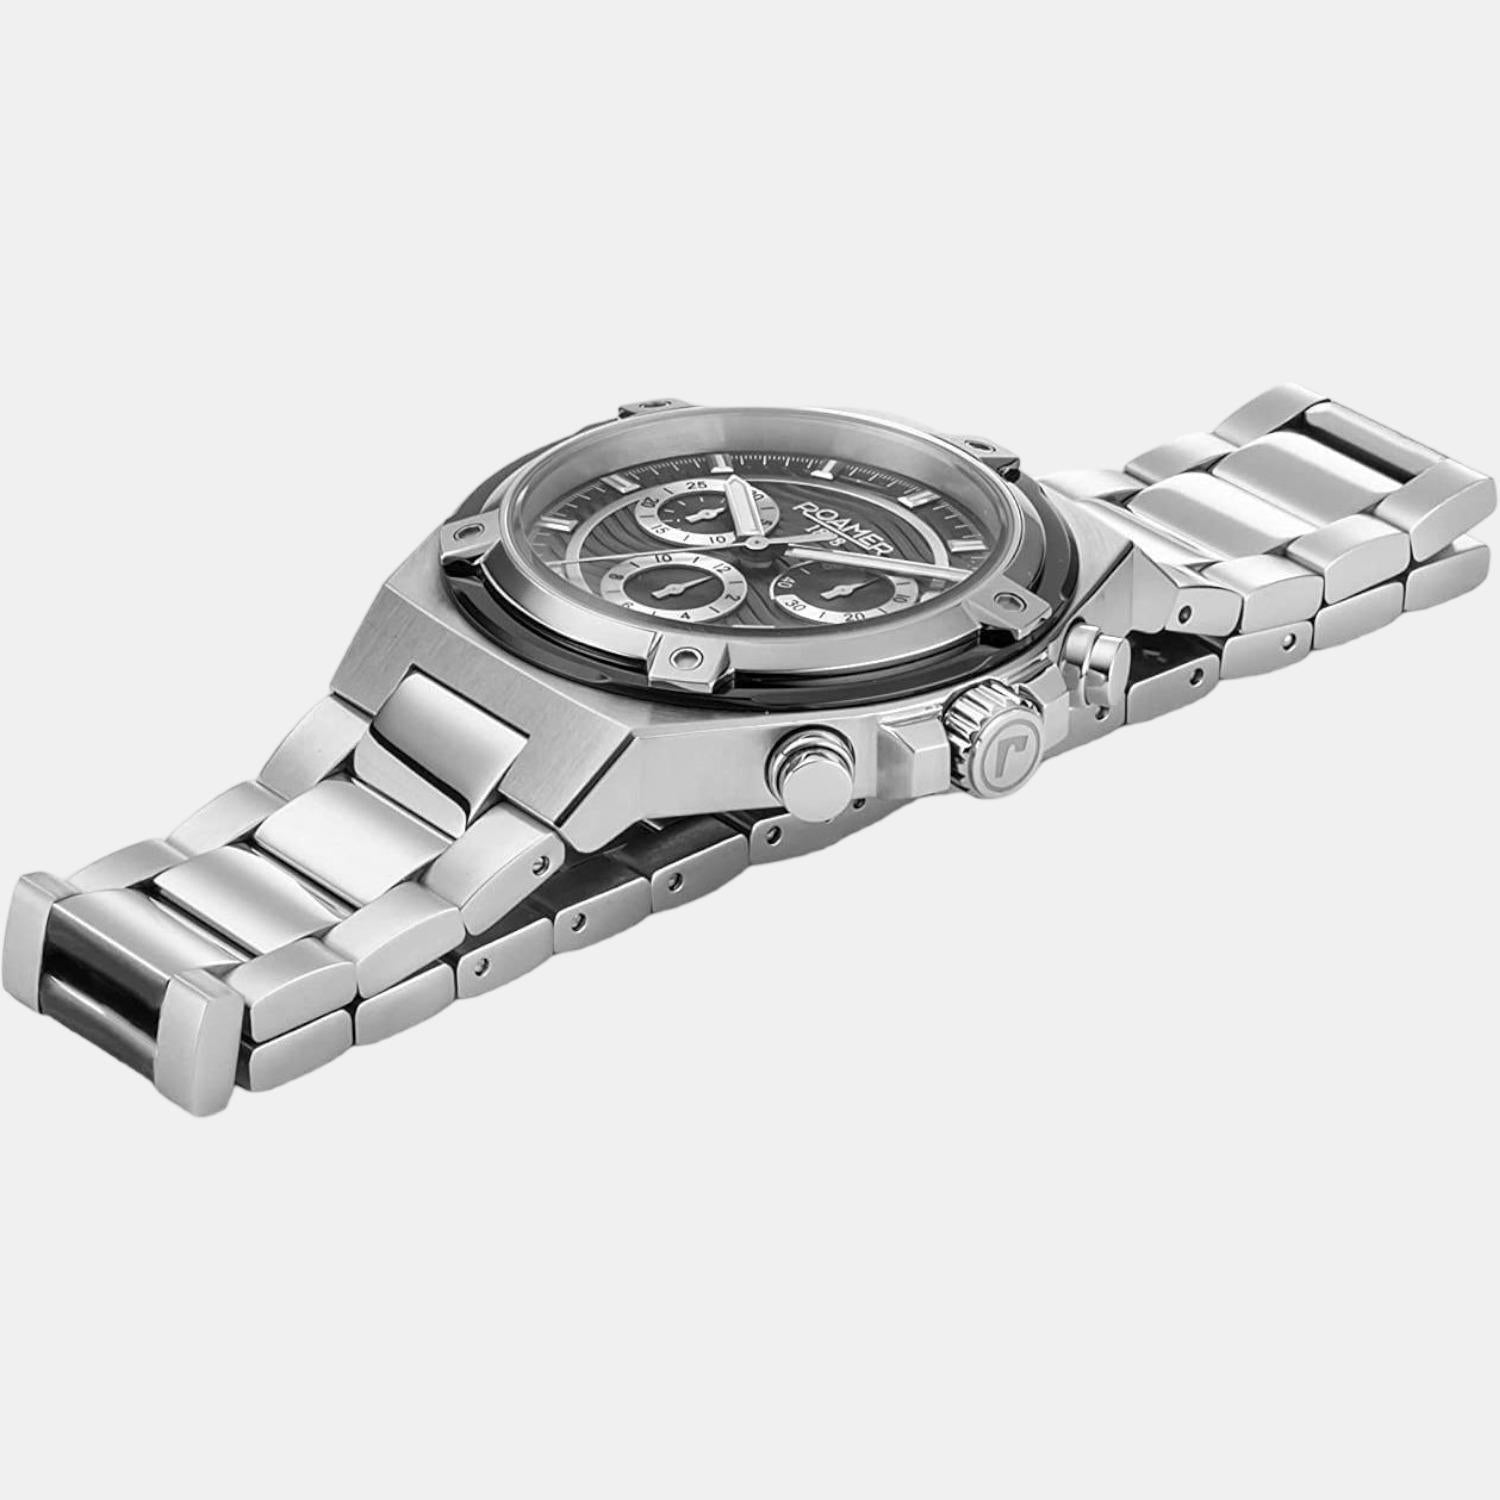 roamer-stainless-steel-black-analog-male-watch-221837-41-55-20